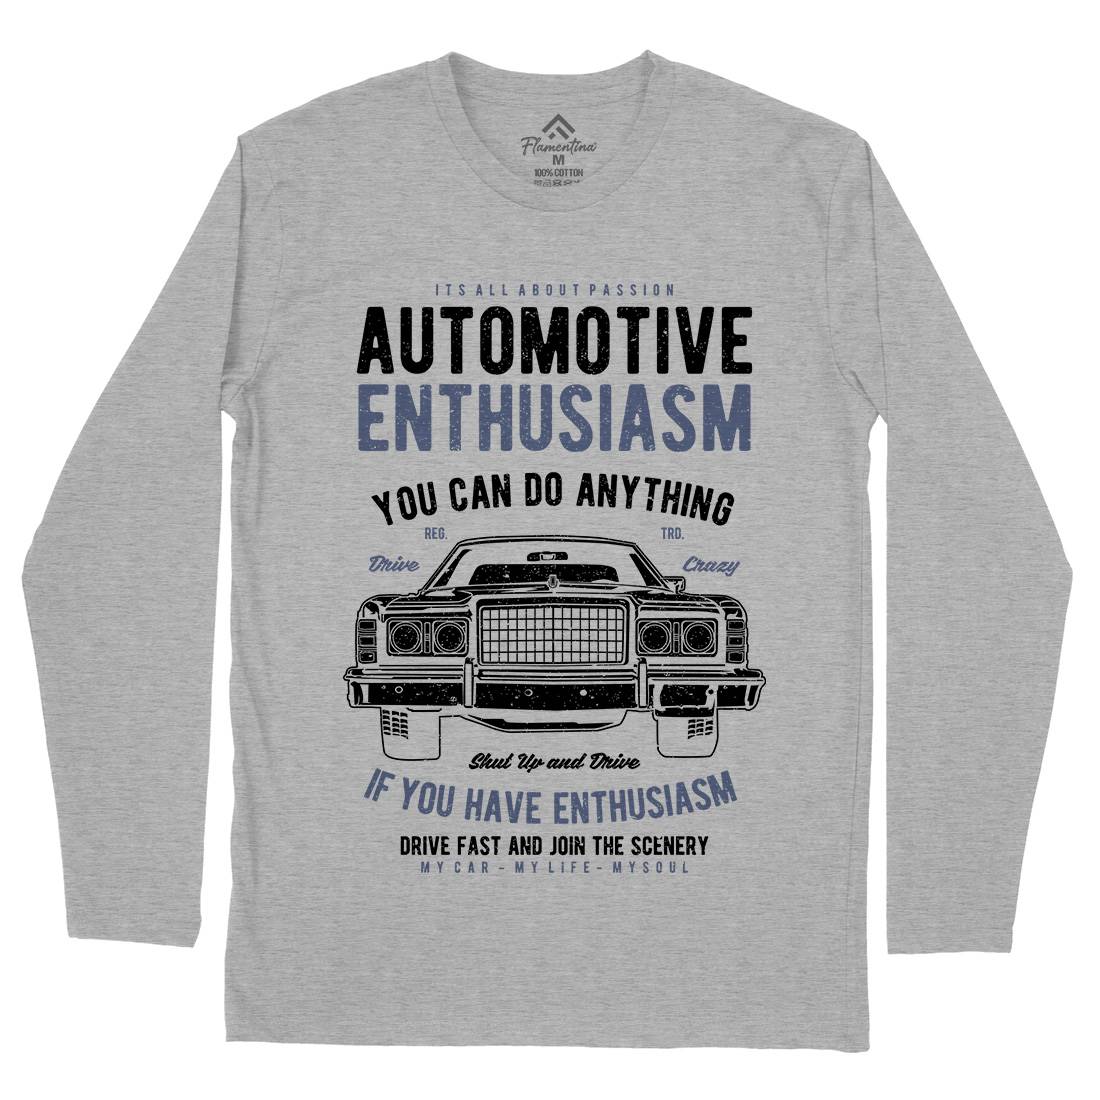 Automotive Enthusiasm Mens Long Sleeve T-Shirt Cars A614